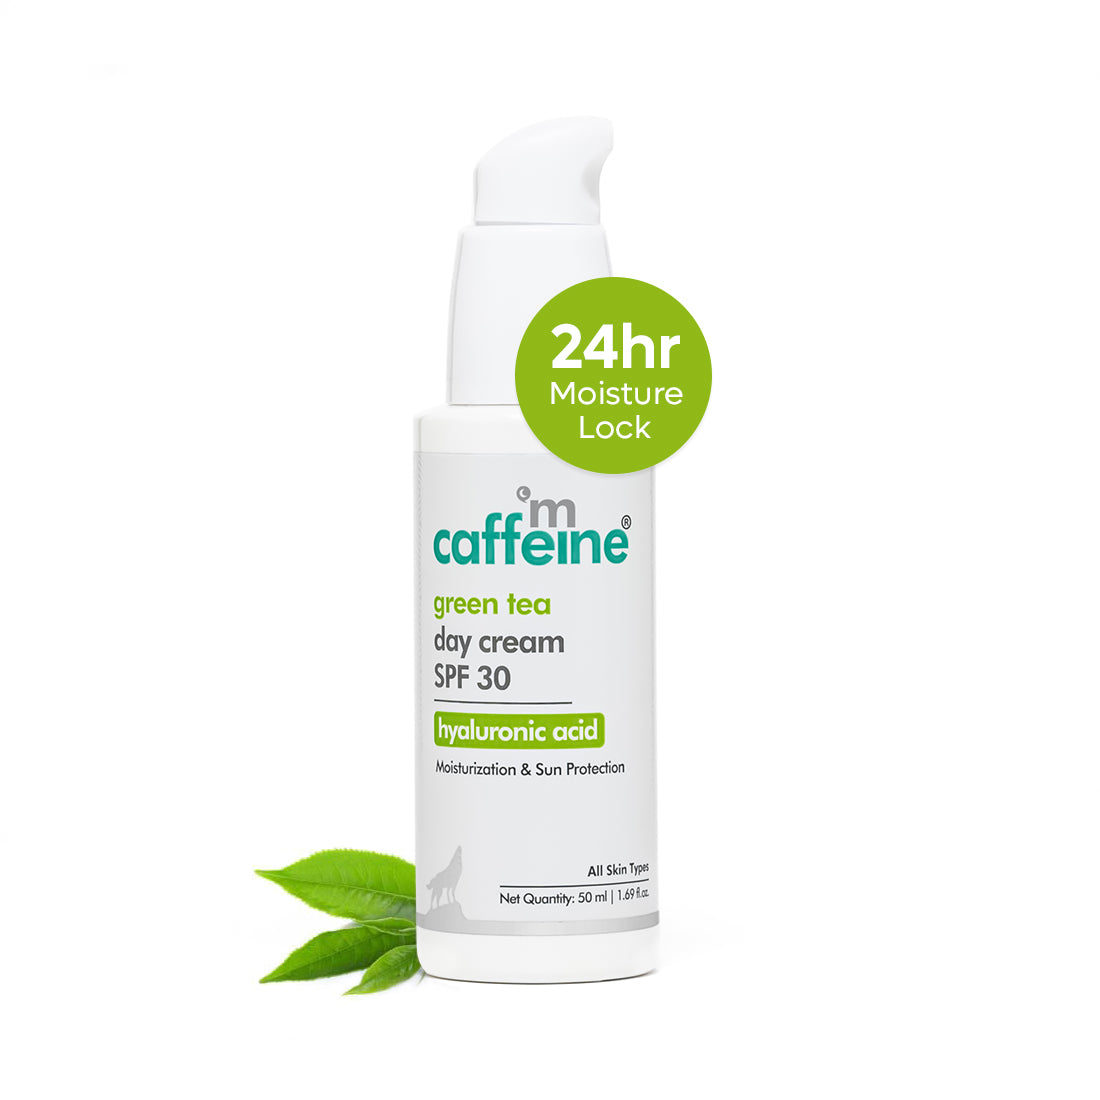 mCaffeine Green Tea day cream SPF 30 with hyaluronic acid